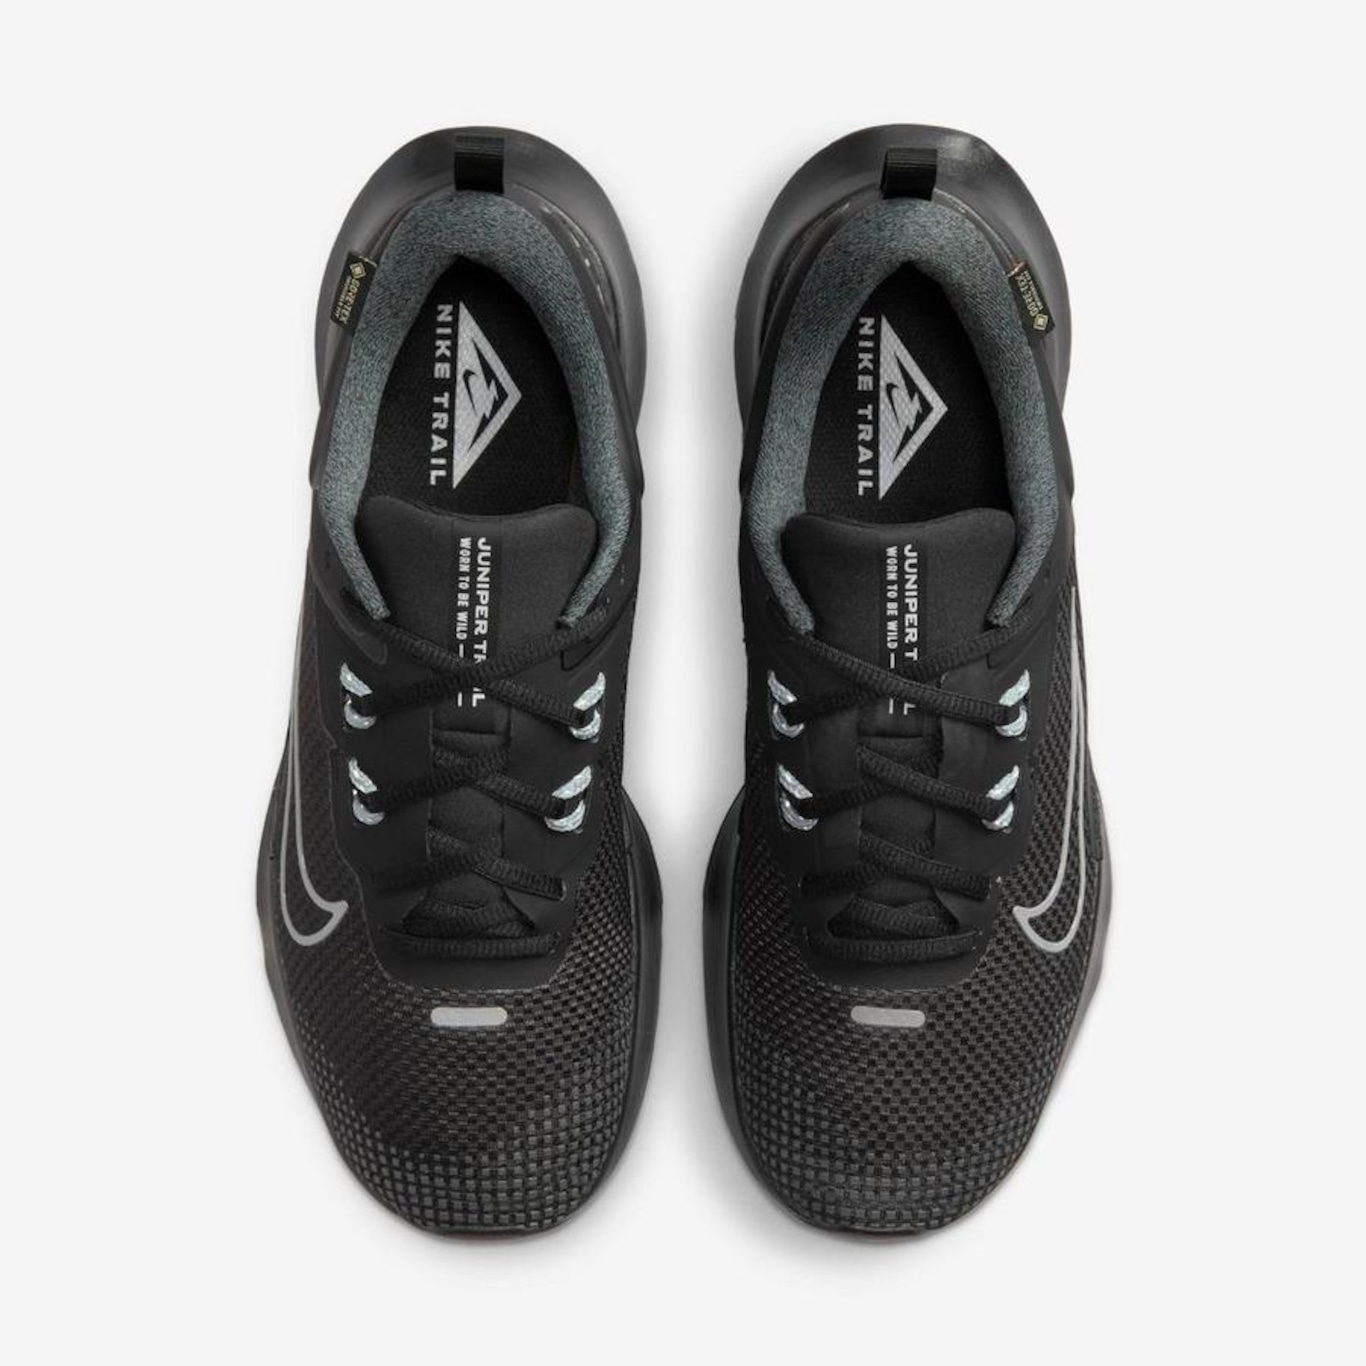 Ropas Masculina Nike - Conjuntos Para Homens - AliExpress